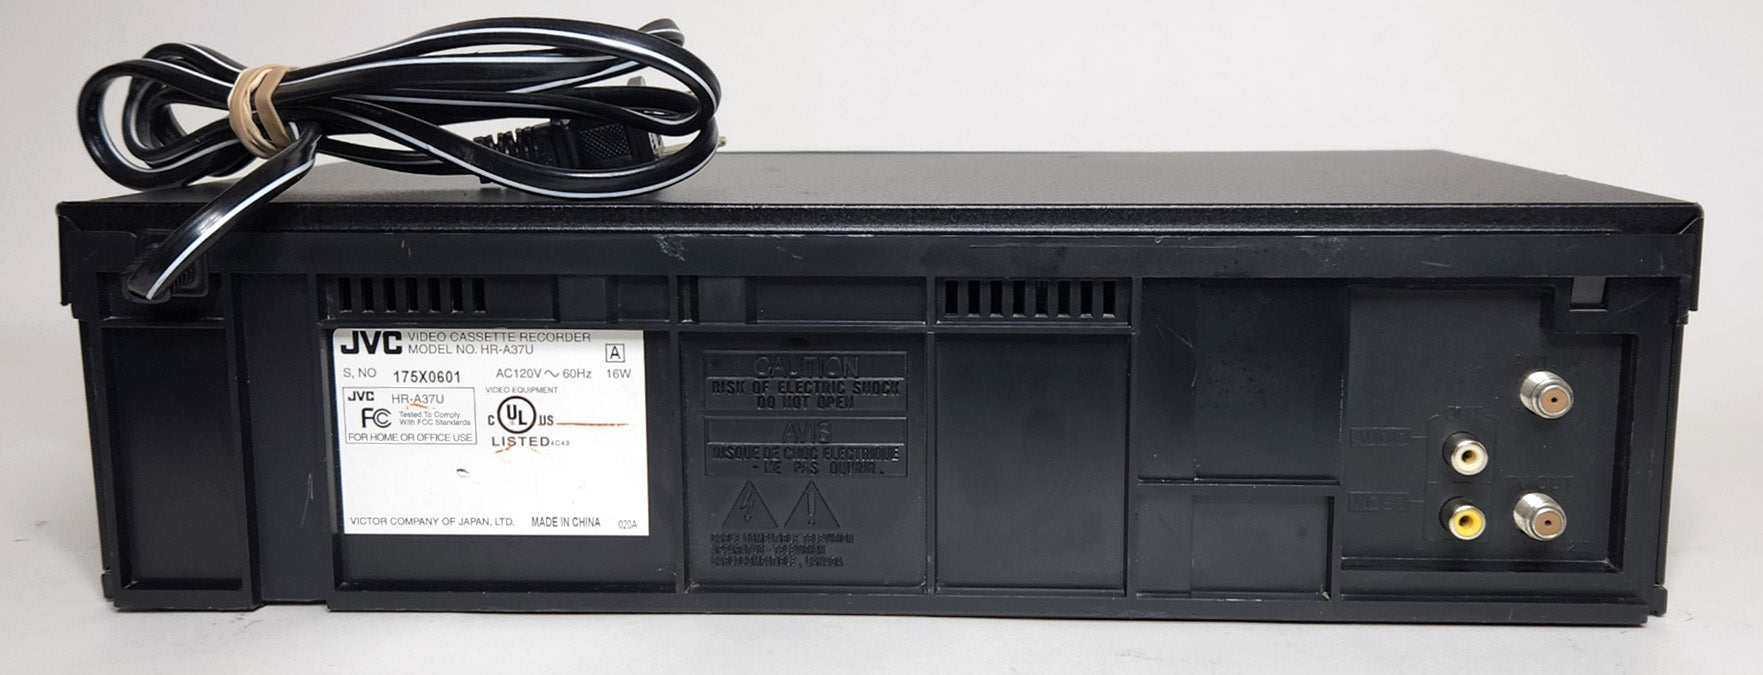 JVC HR-A37U VCR, 4-Head Mono - Rear